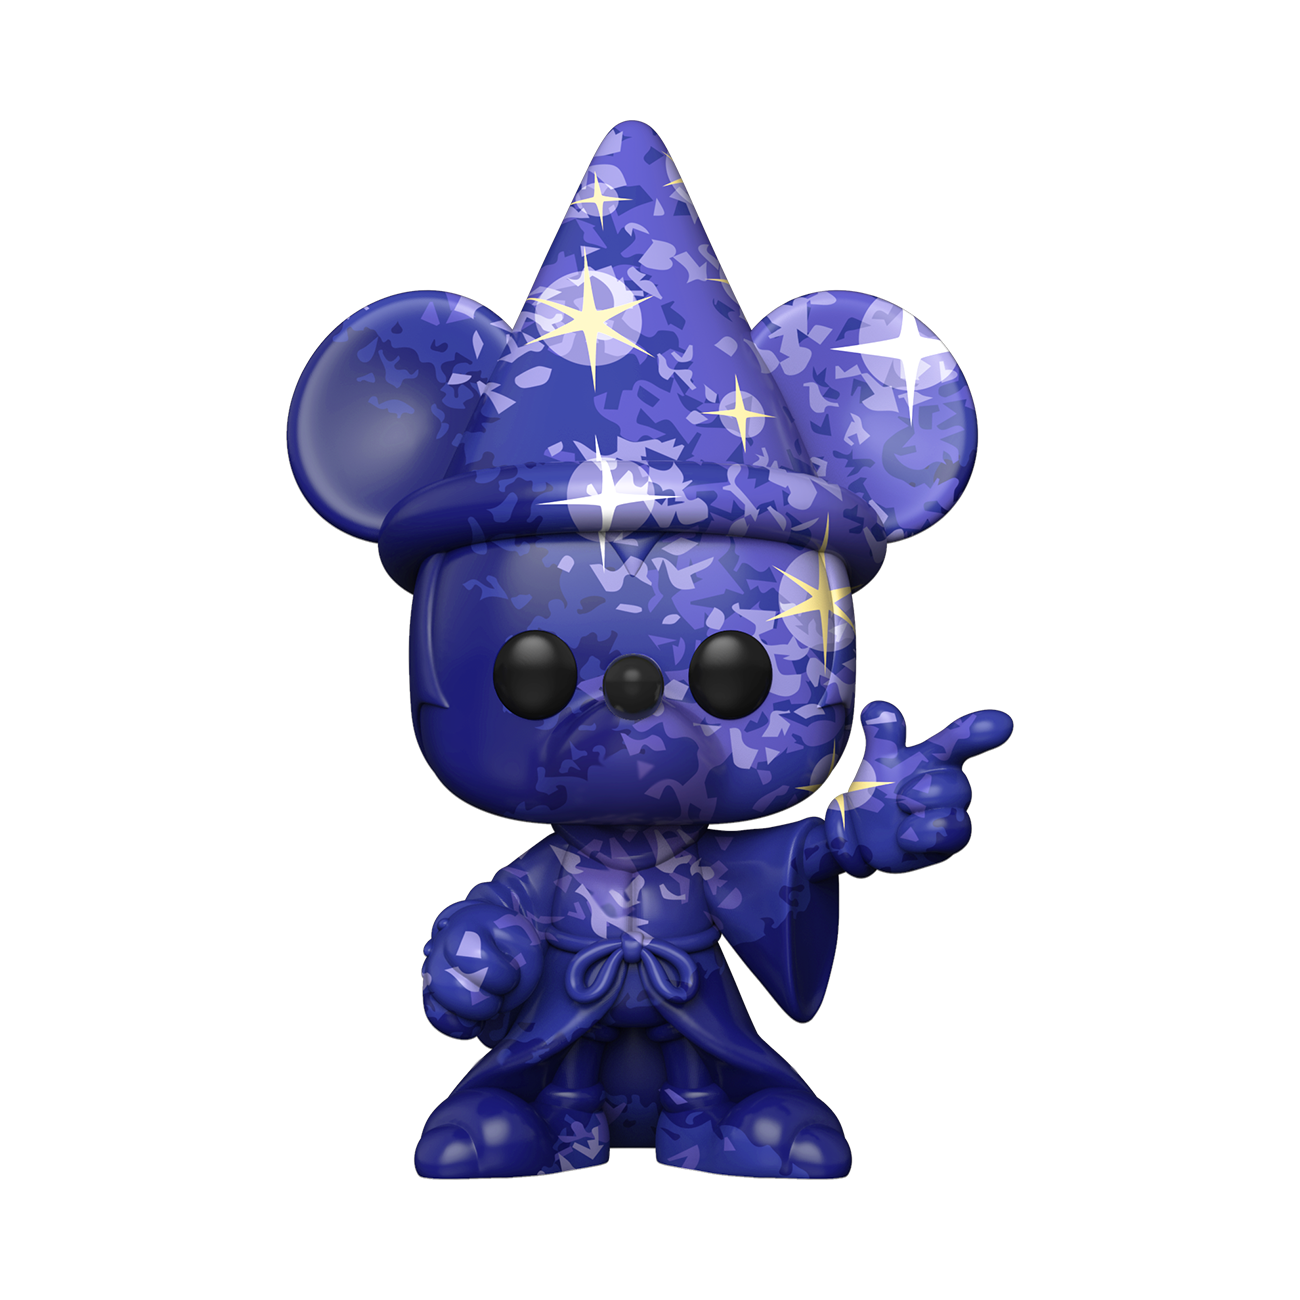 POP! Art Series: Disney Fantasia - Sorcerer Mickey